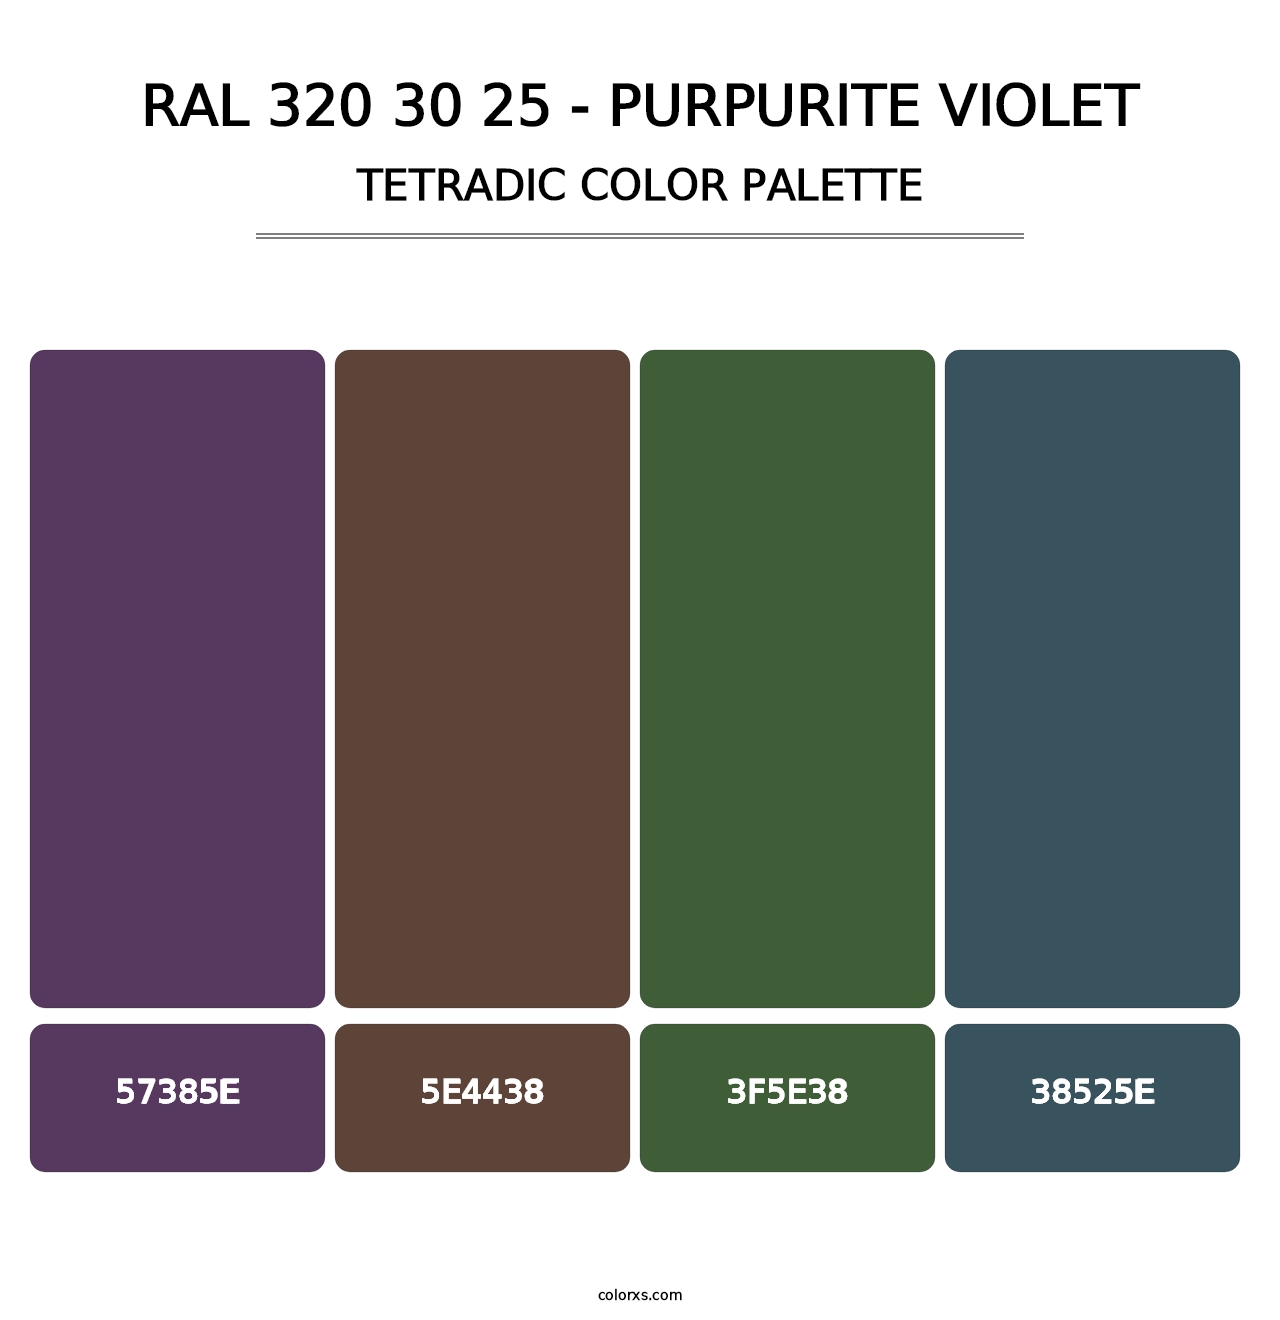 RAL 320 30 25 - Purpurite Violet - Tetradic Color Palette